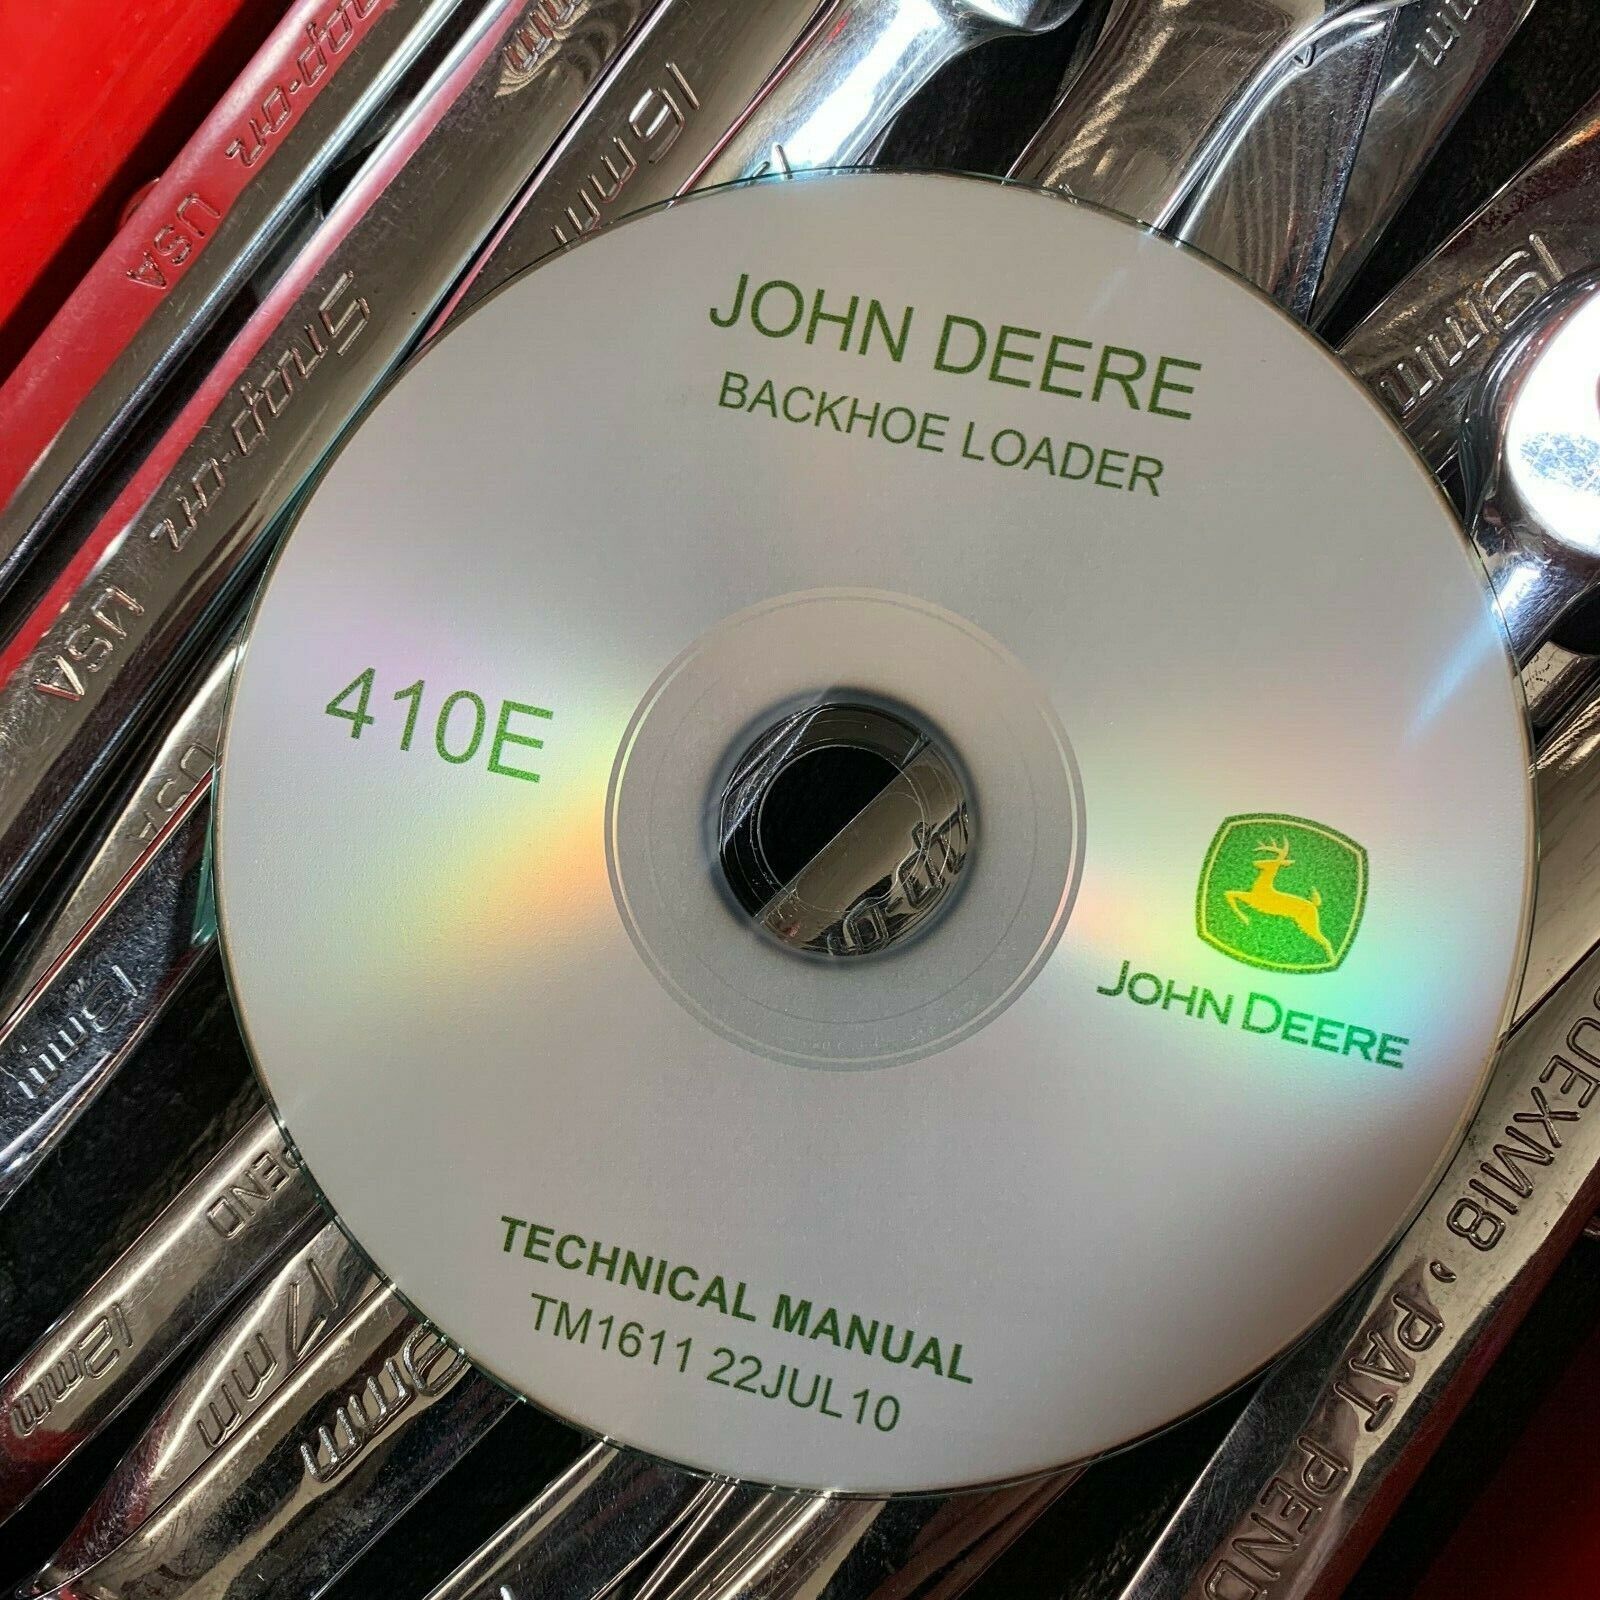 John Deere 410E Backhoe Loader Technical Service Repair Manual TM1611 22JUL10 CD